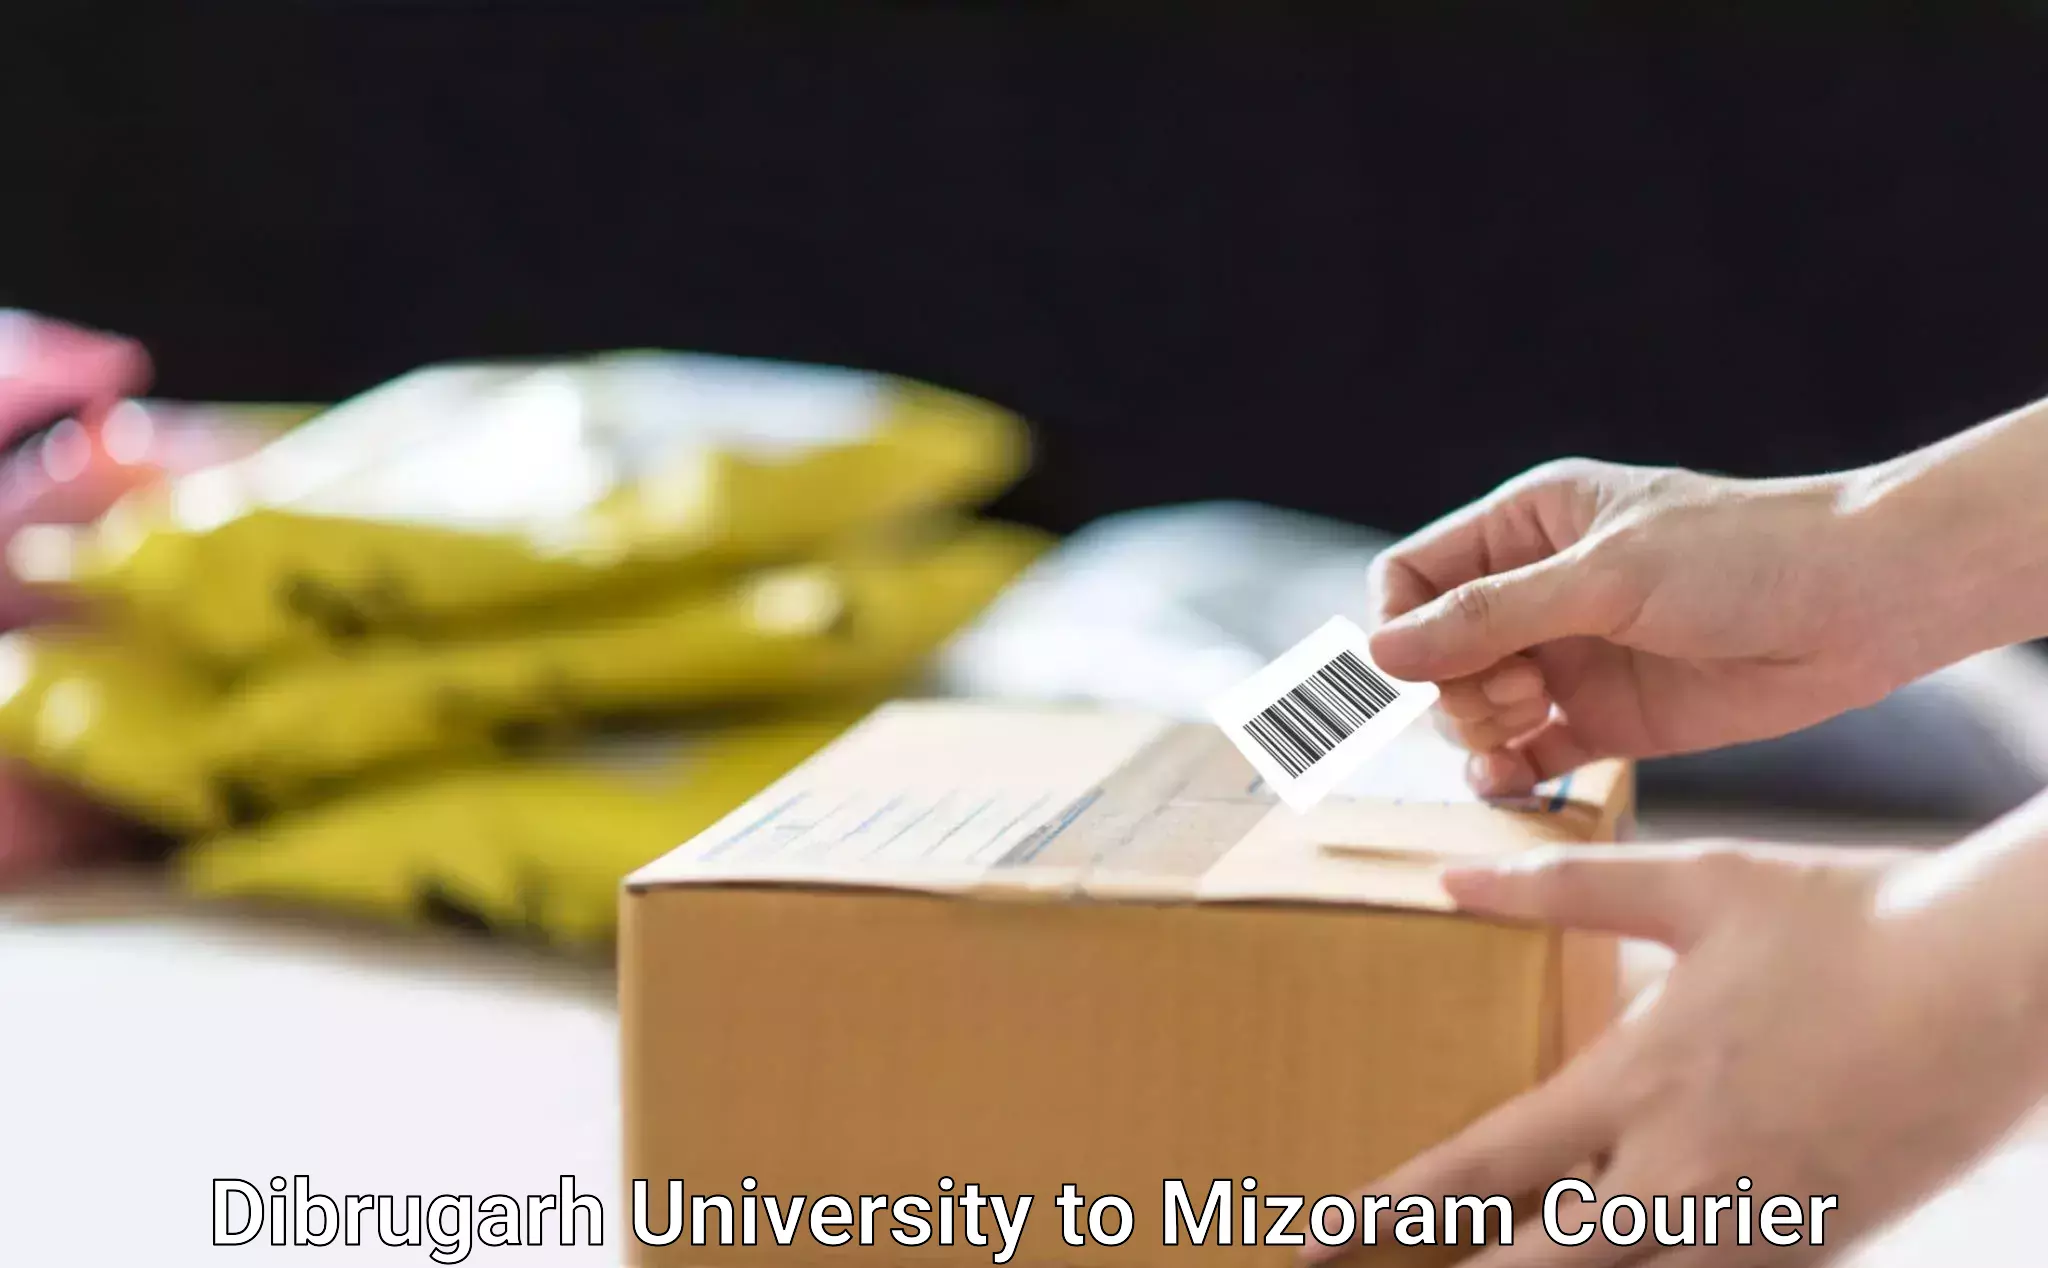 Courier service comparison Dibrugarh University to Mizoram University Aizawl